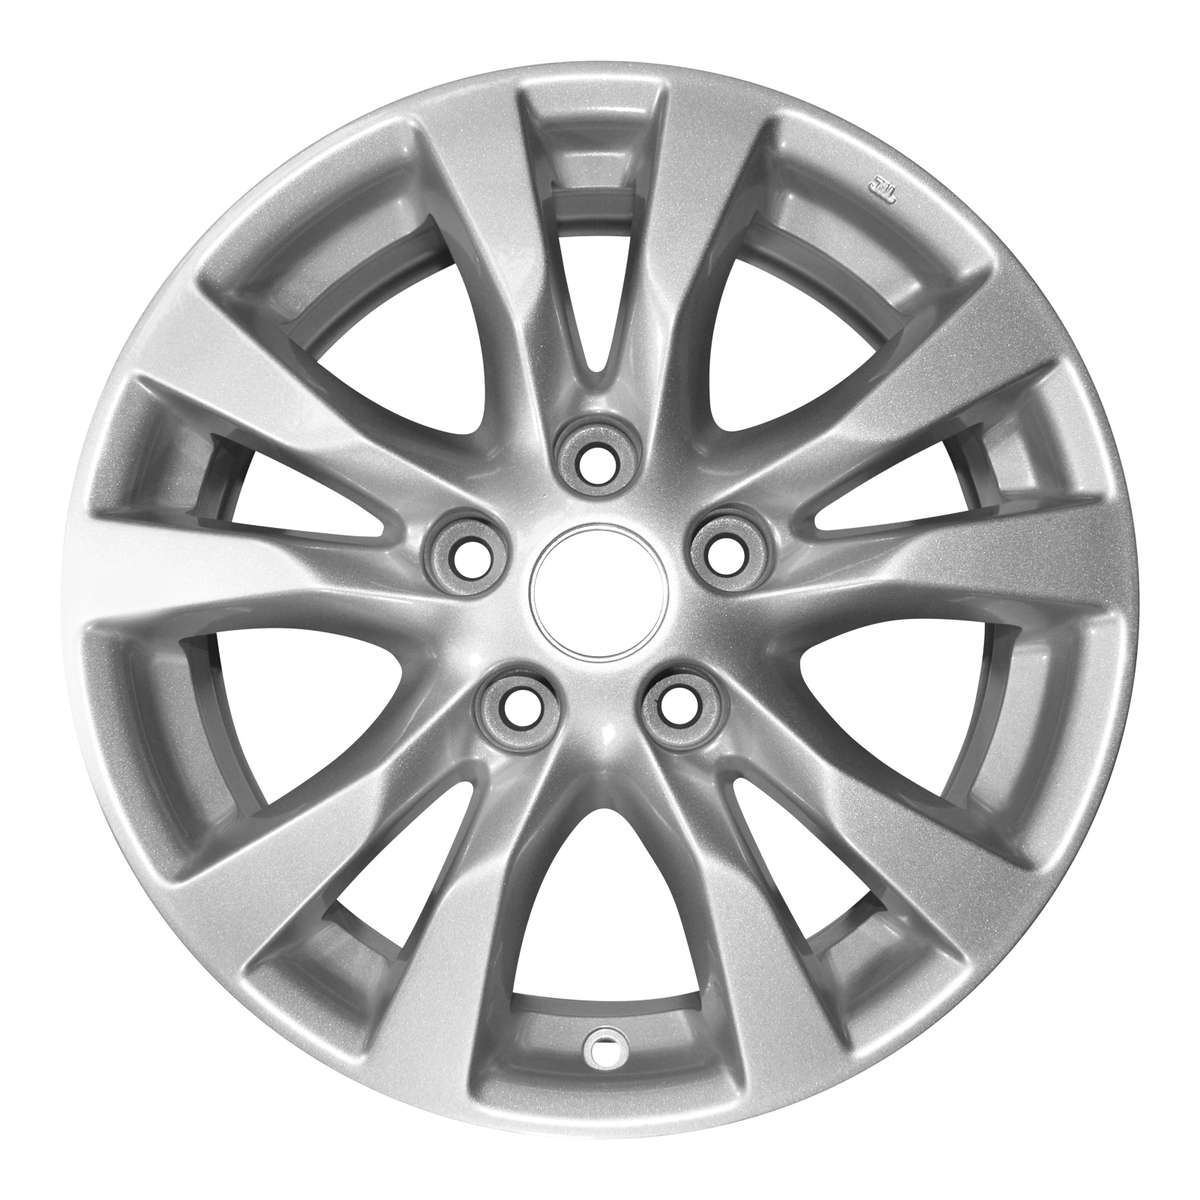 2015 Nissan Altima 16" OEM Wheel Rim W62718S